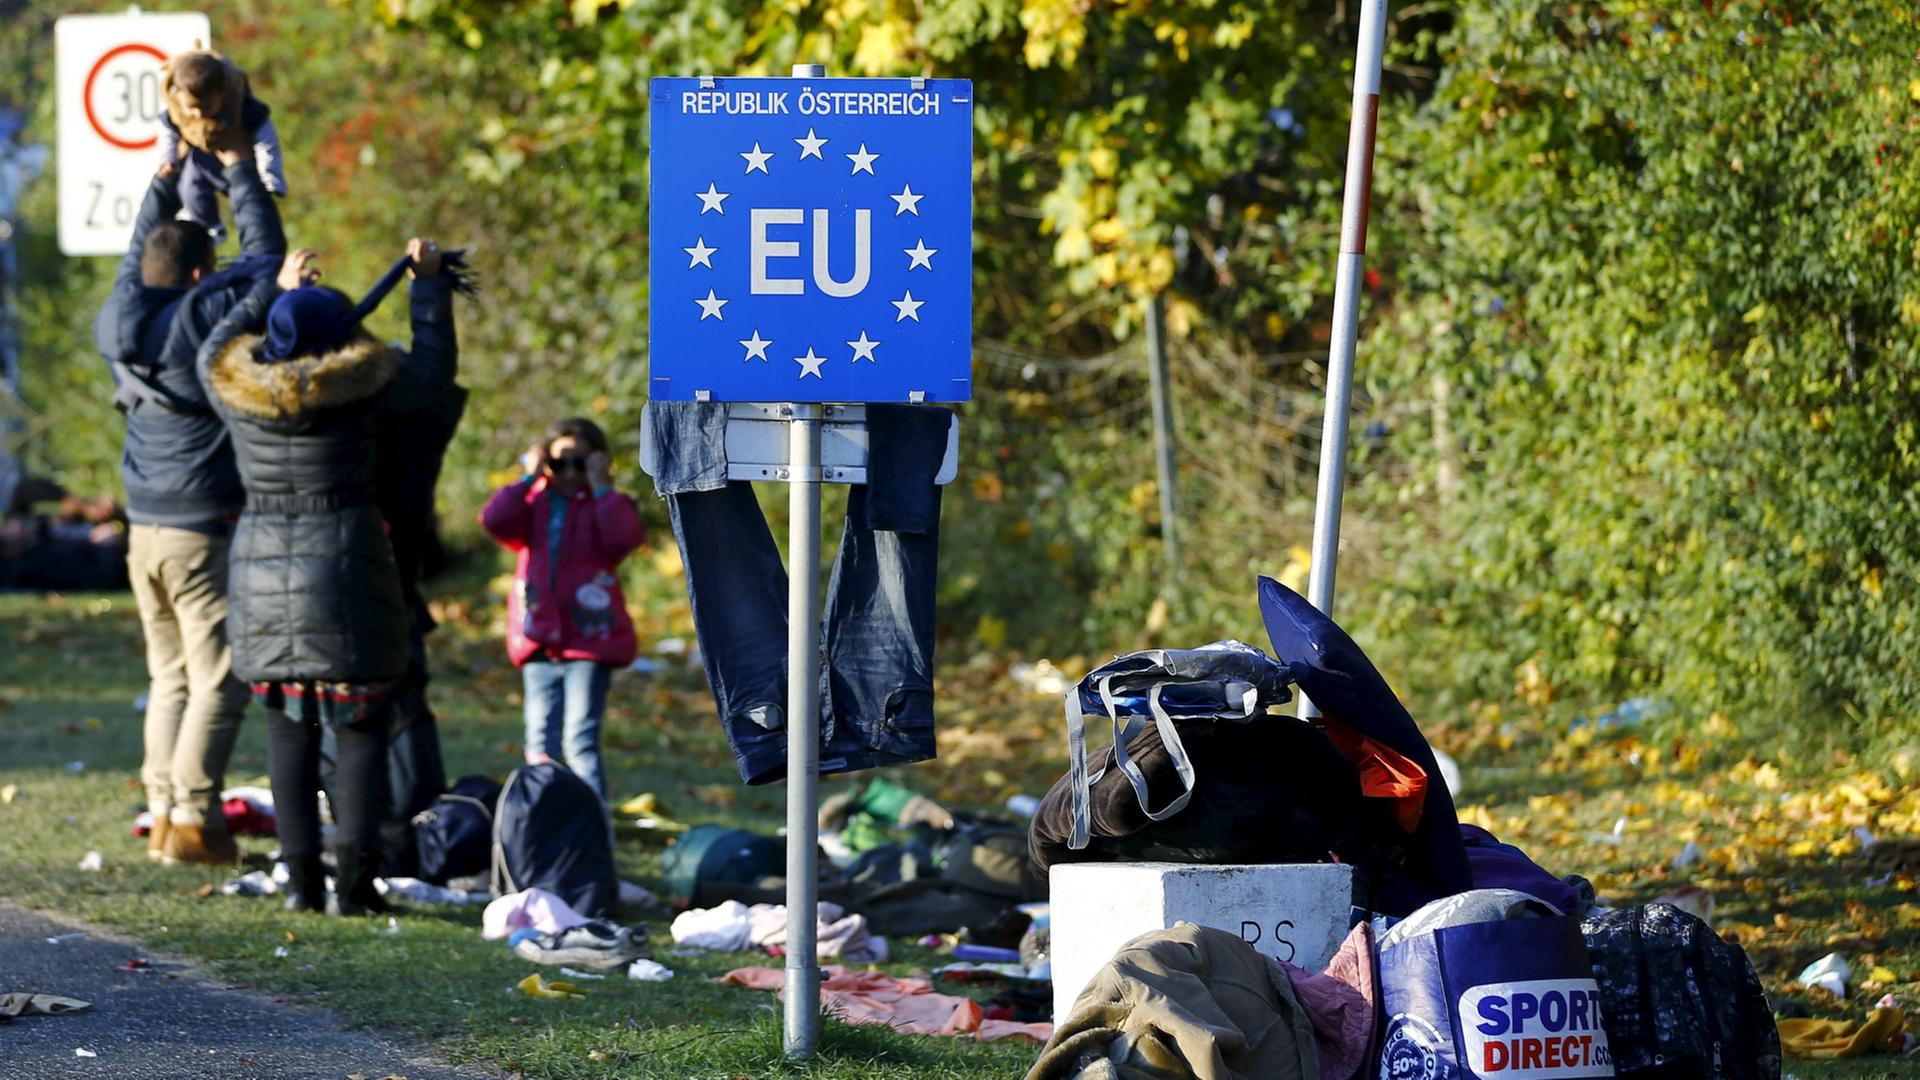 Spalten Flüchtlinge die EU?